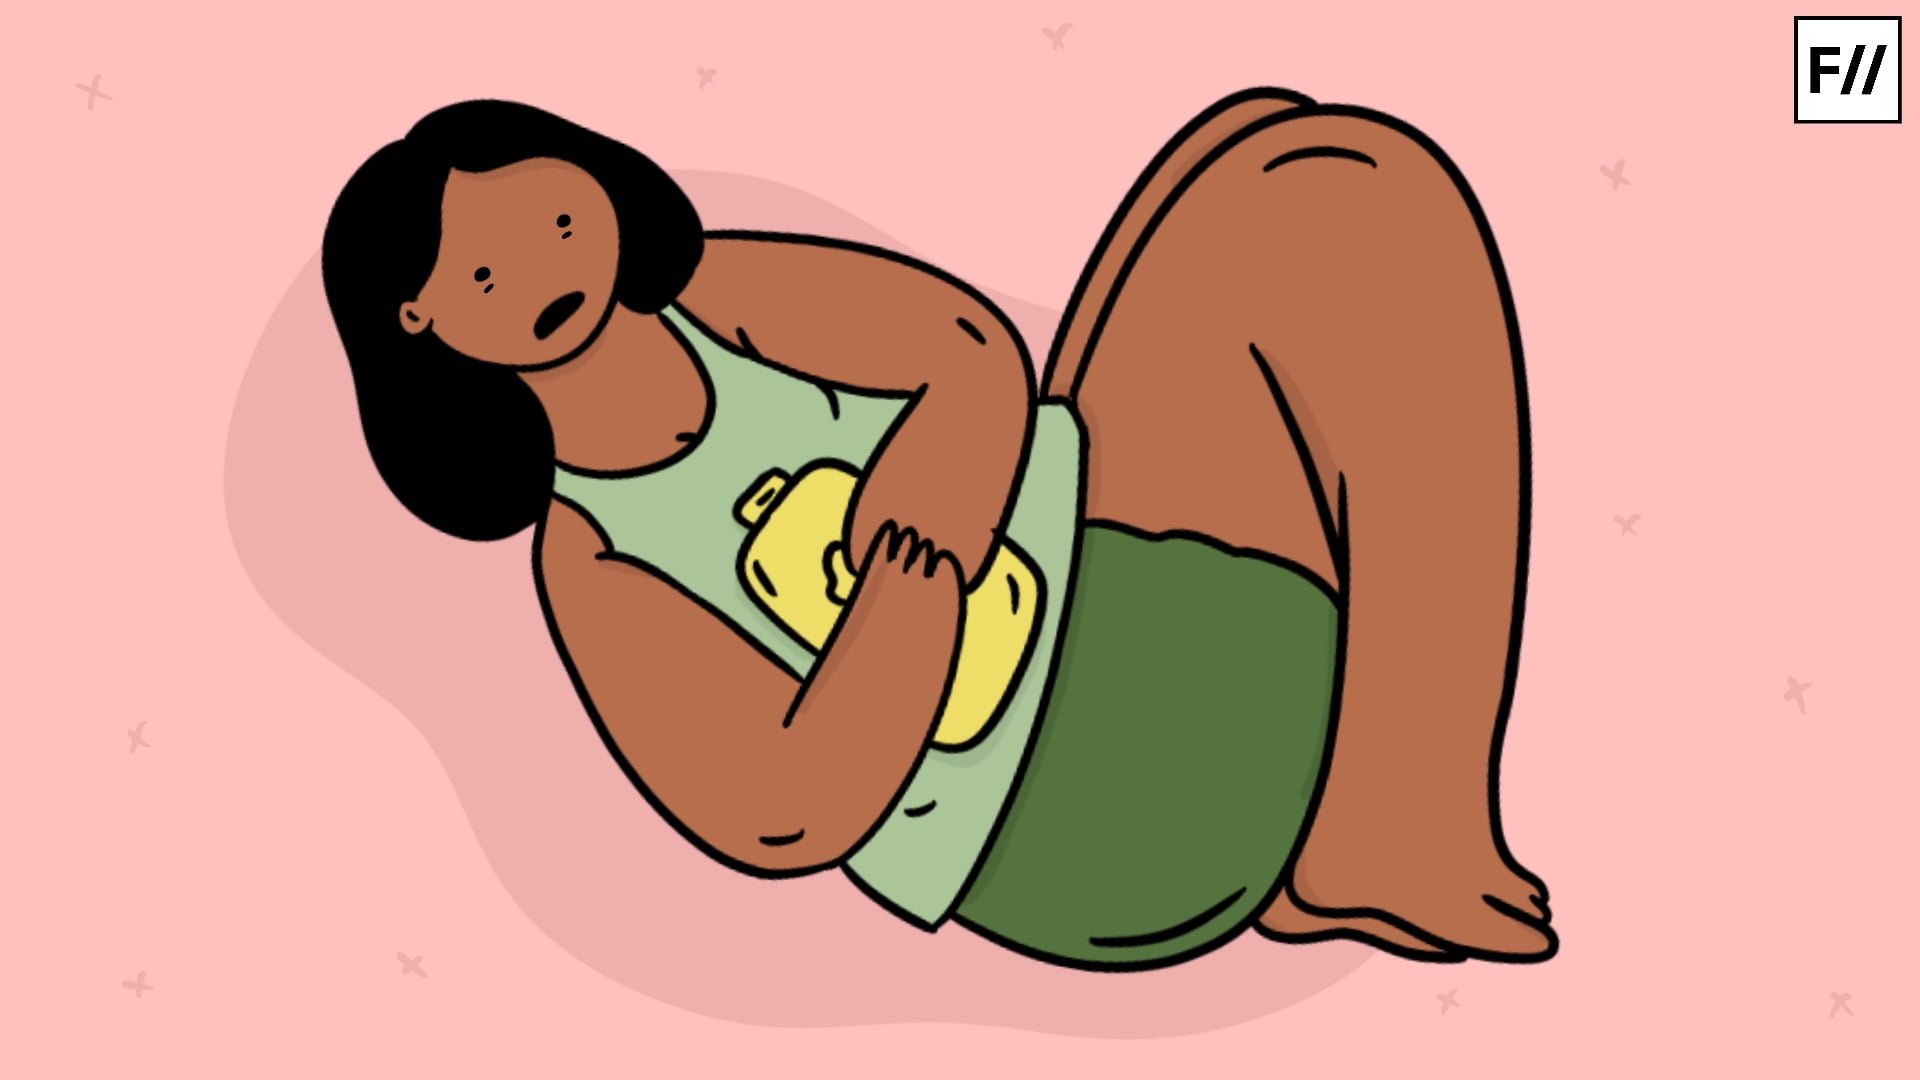 Shreya Tingal's illustration of period cramps for FII